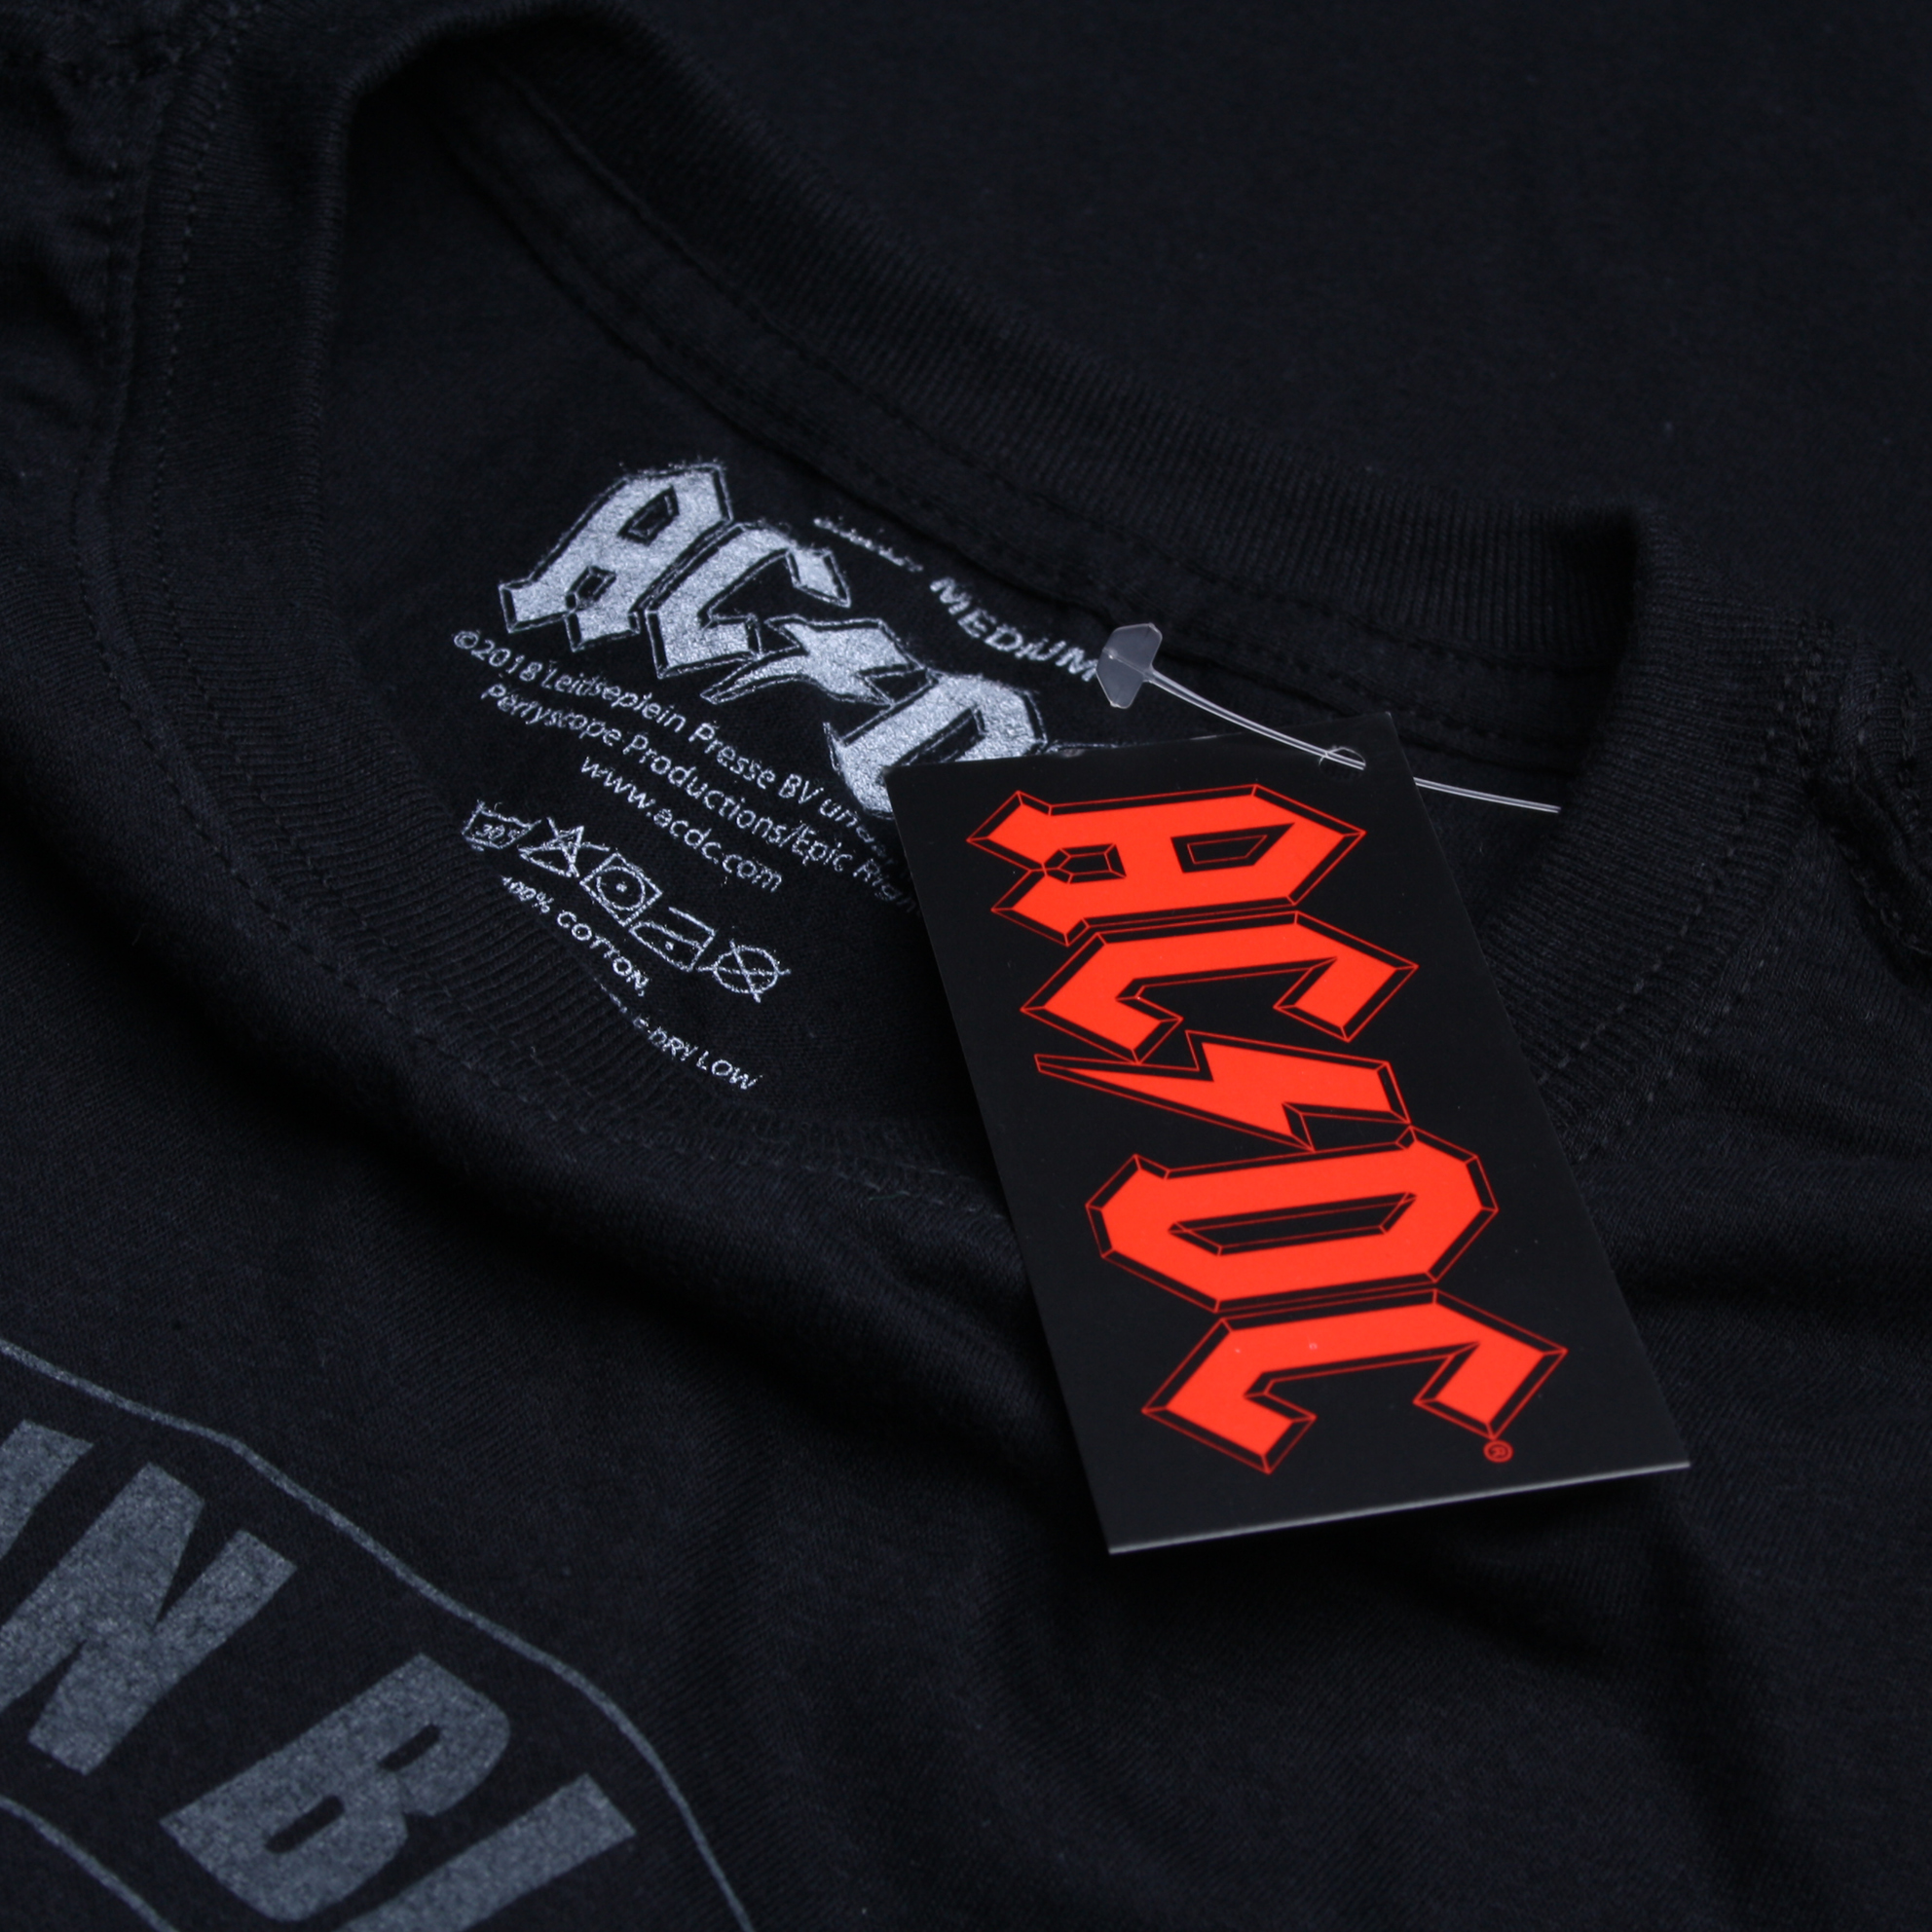 AC/DC Tour Emblem Black T-Shirt | The Rainy Days